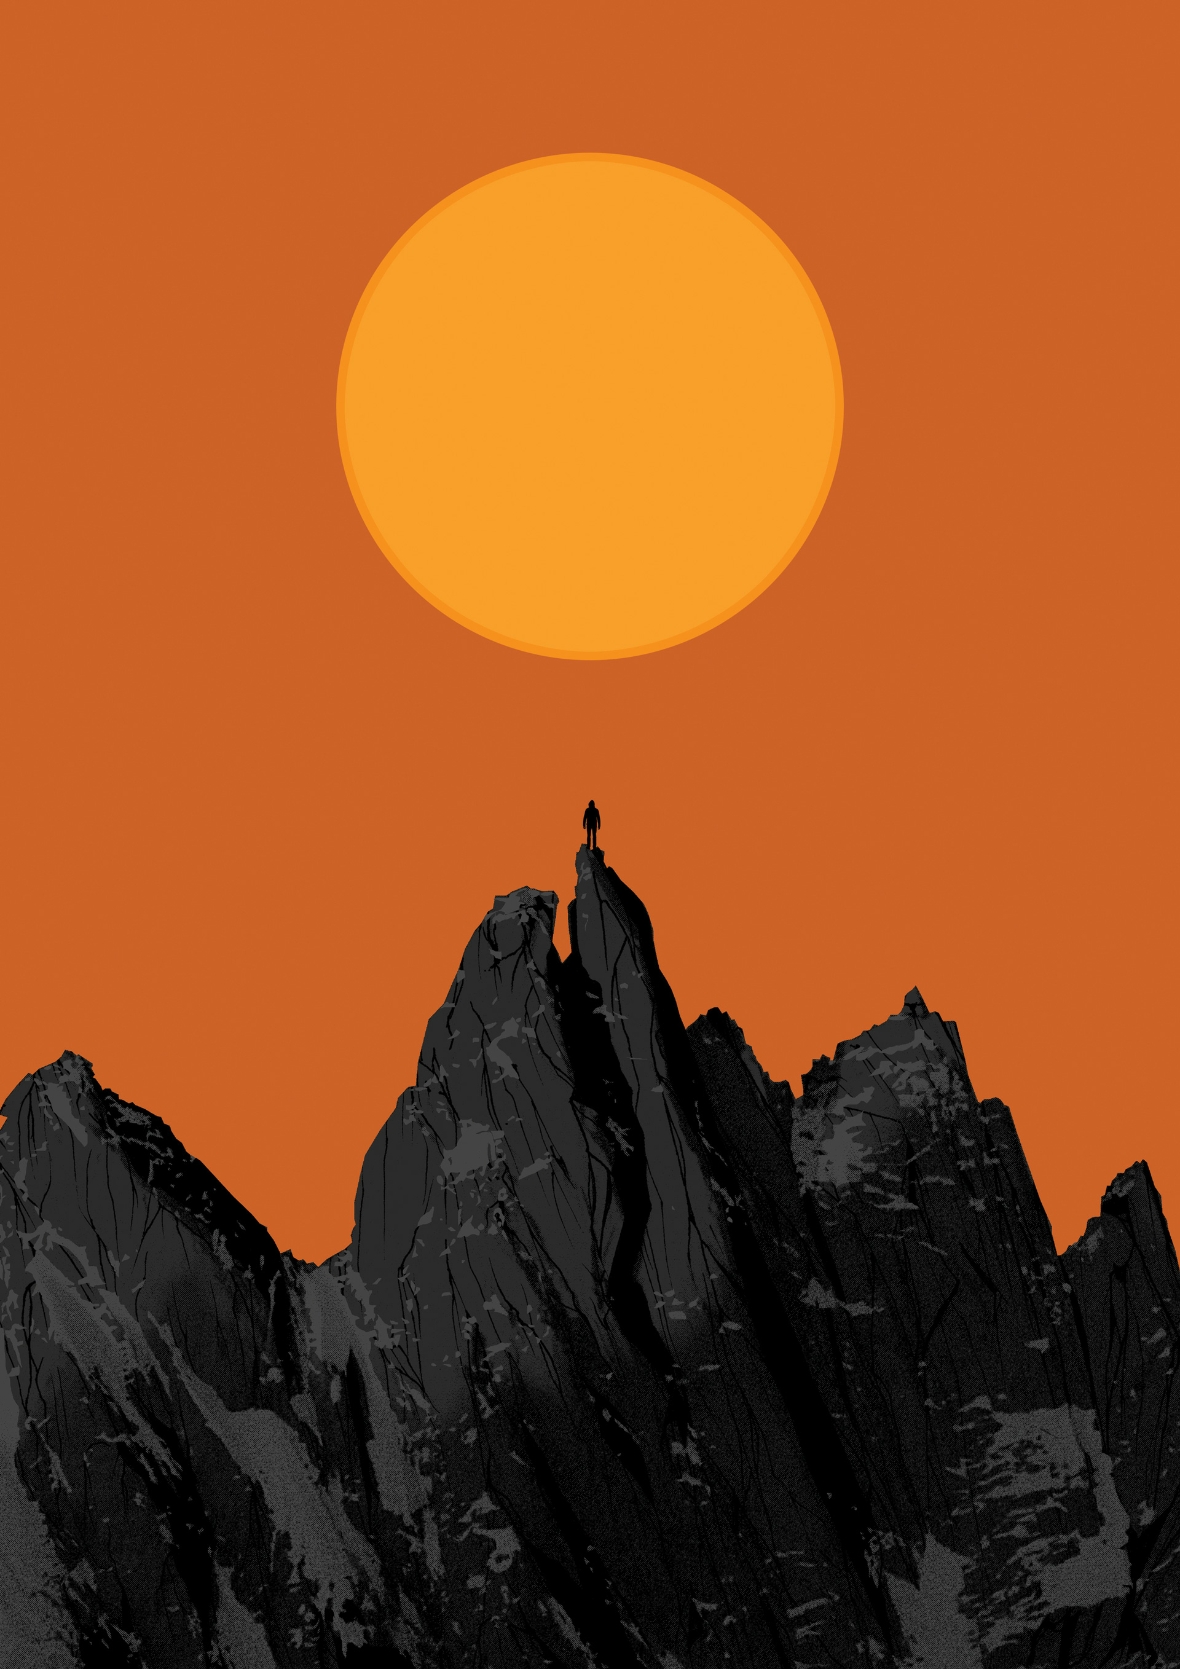 portrait display, Artwork, Digital art, Mountains, Rock climbing, Sun, Orange background Wallpaper